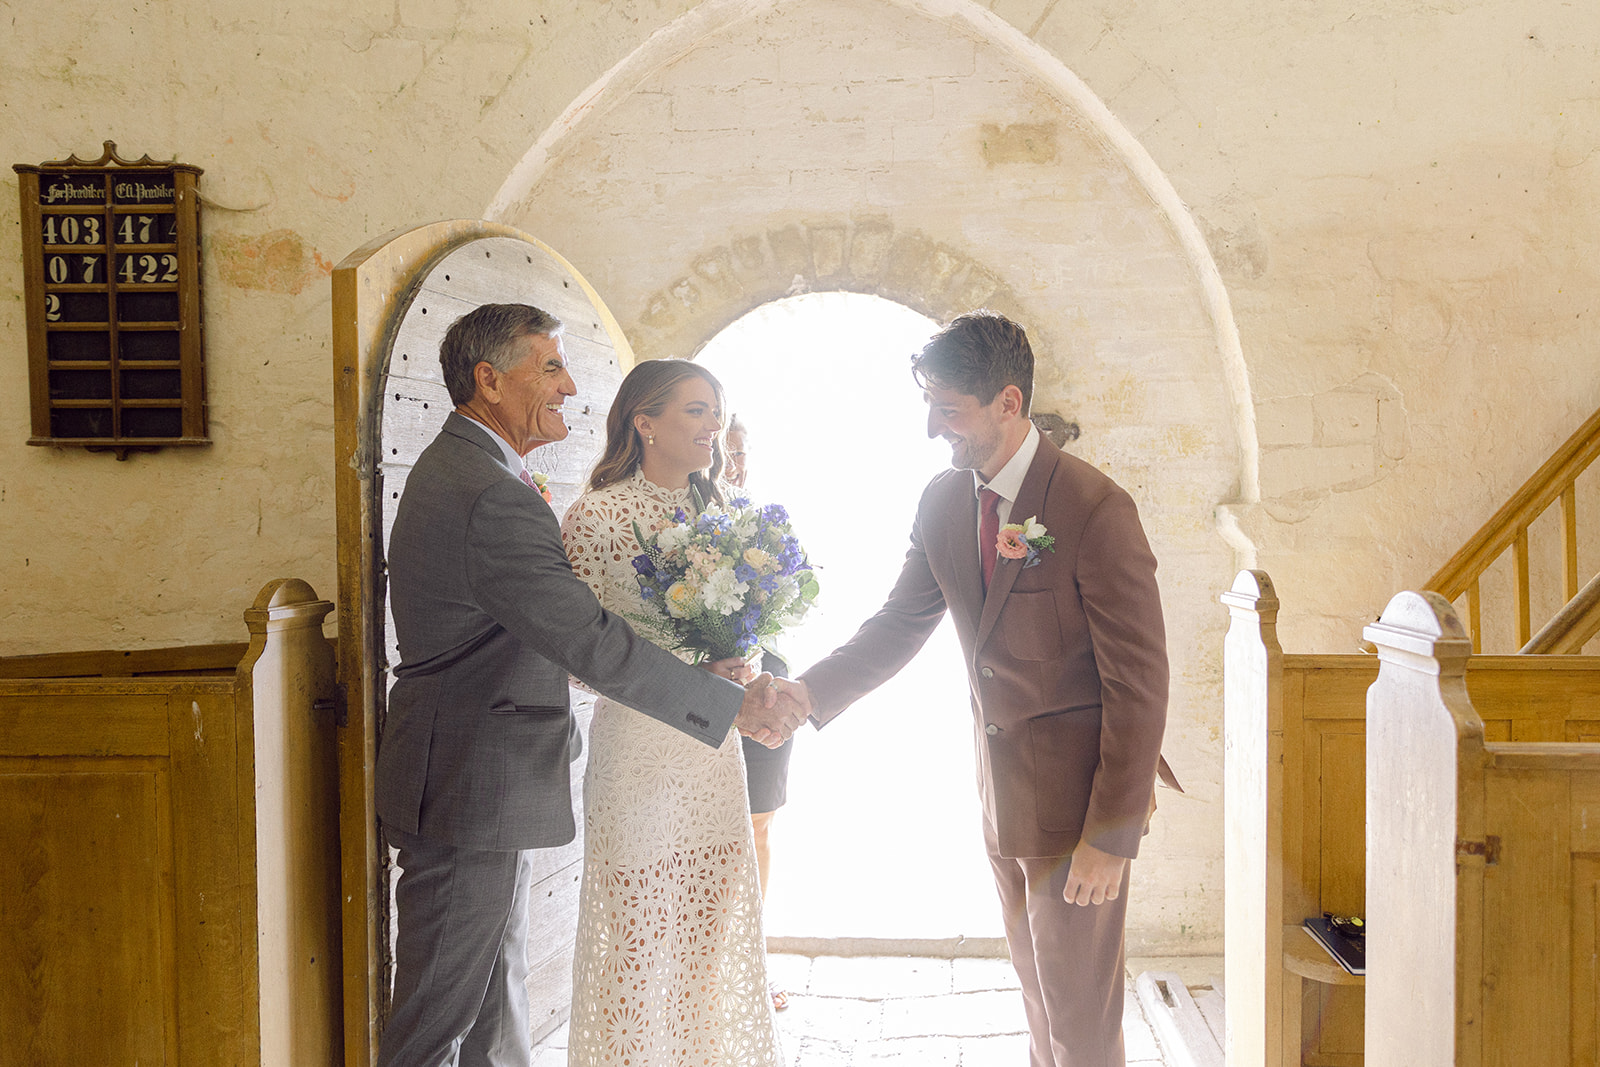 Idyllic Summer Escape - Beautiful Destination Wedding in Denmark